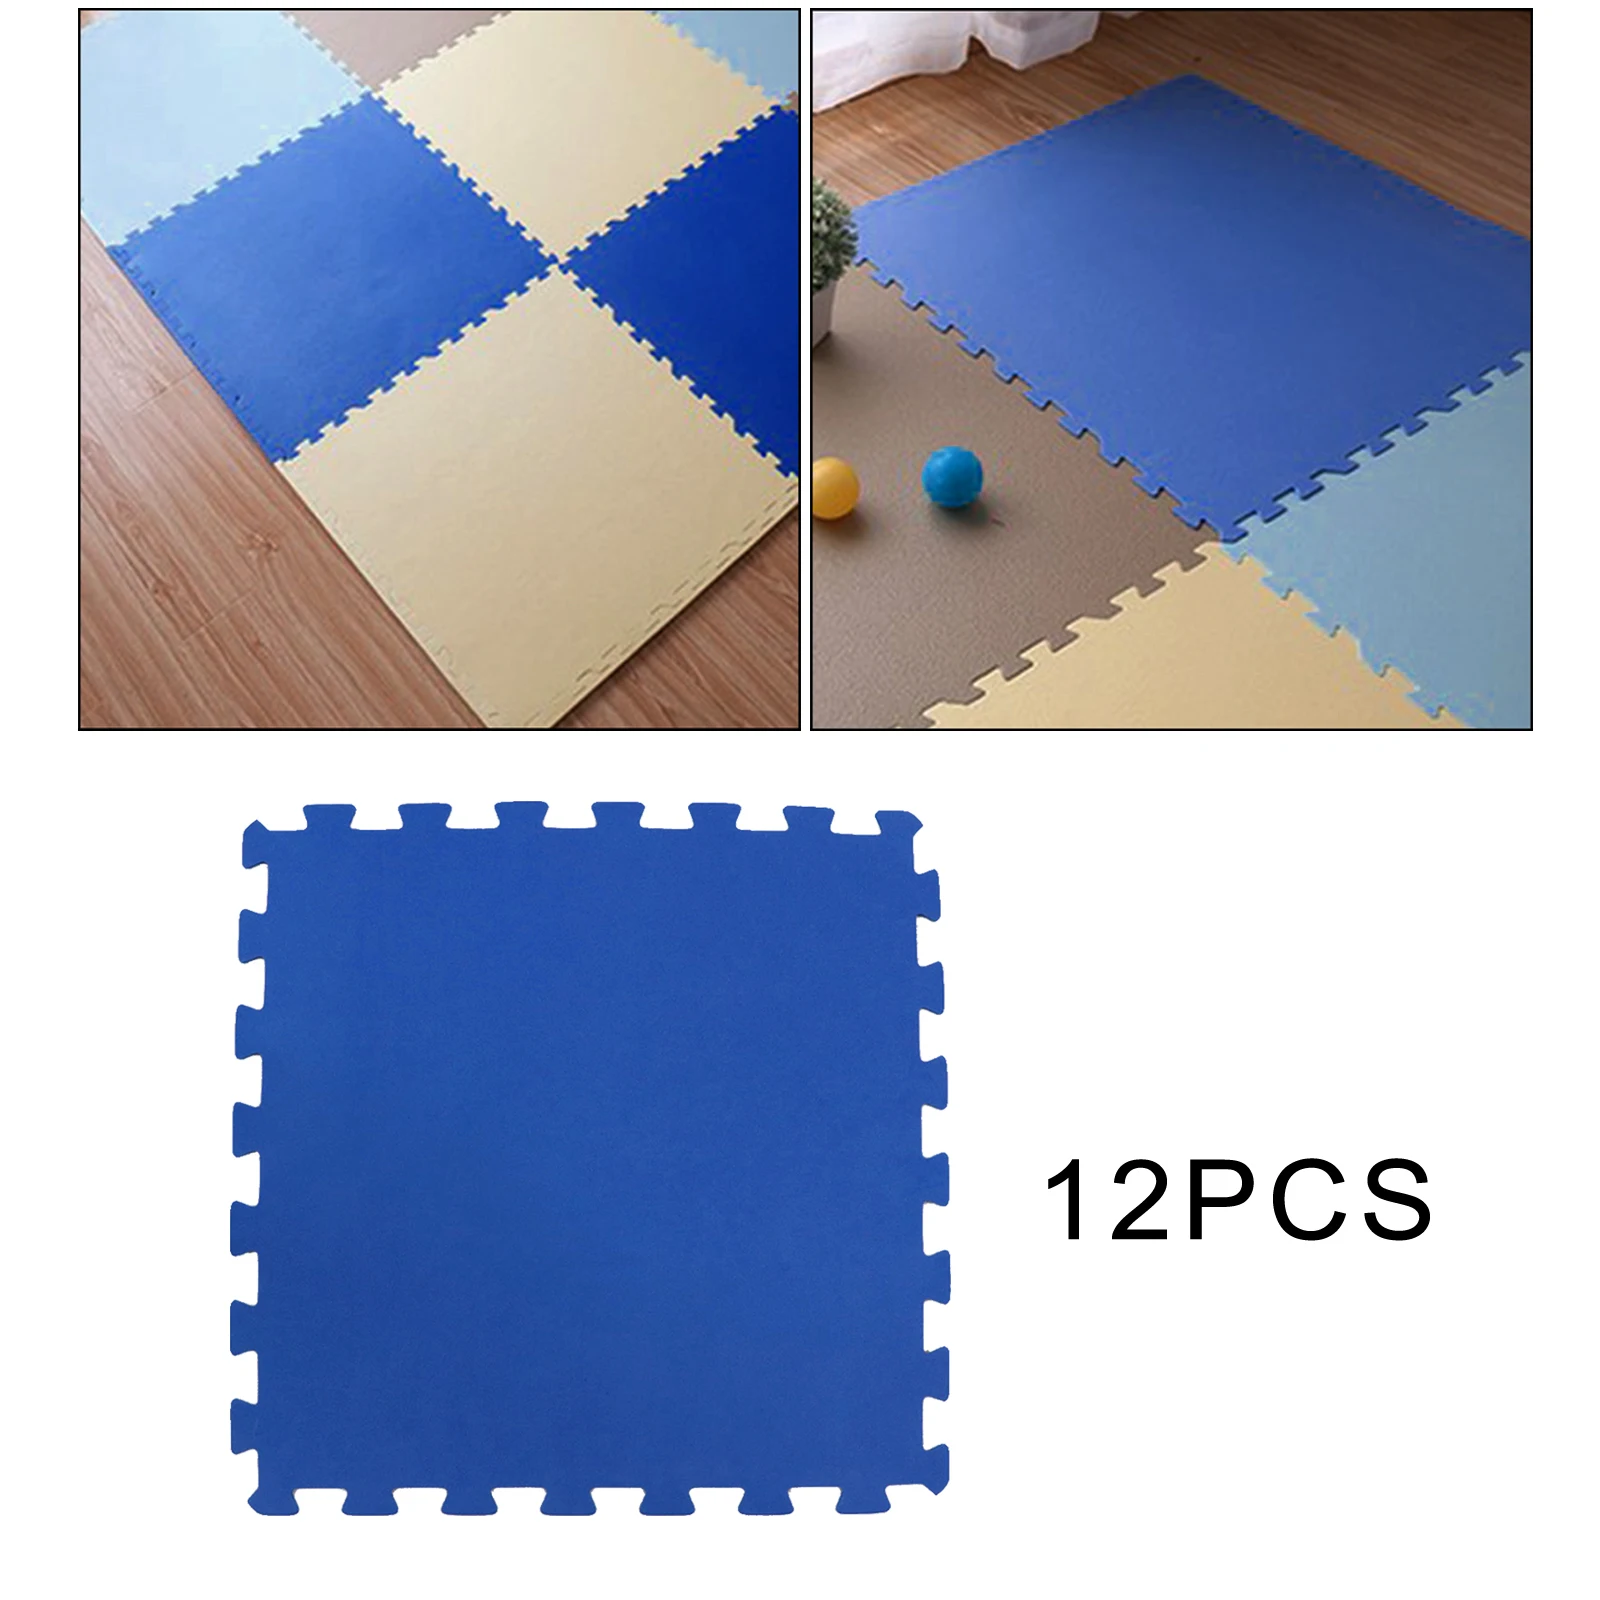 12 Pcs Interlocking Puzzle Mat Waterproof Flooring Padding Tiles Play Mat Baby Crawling Pad 50x50cm